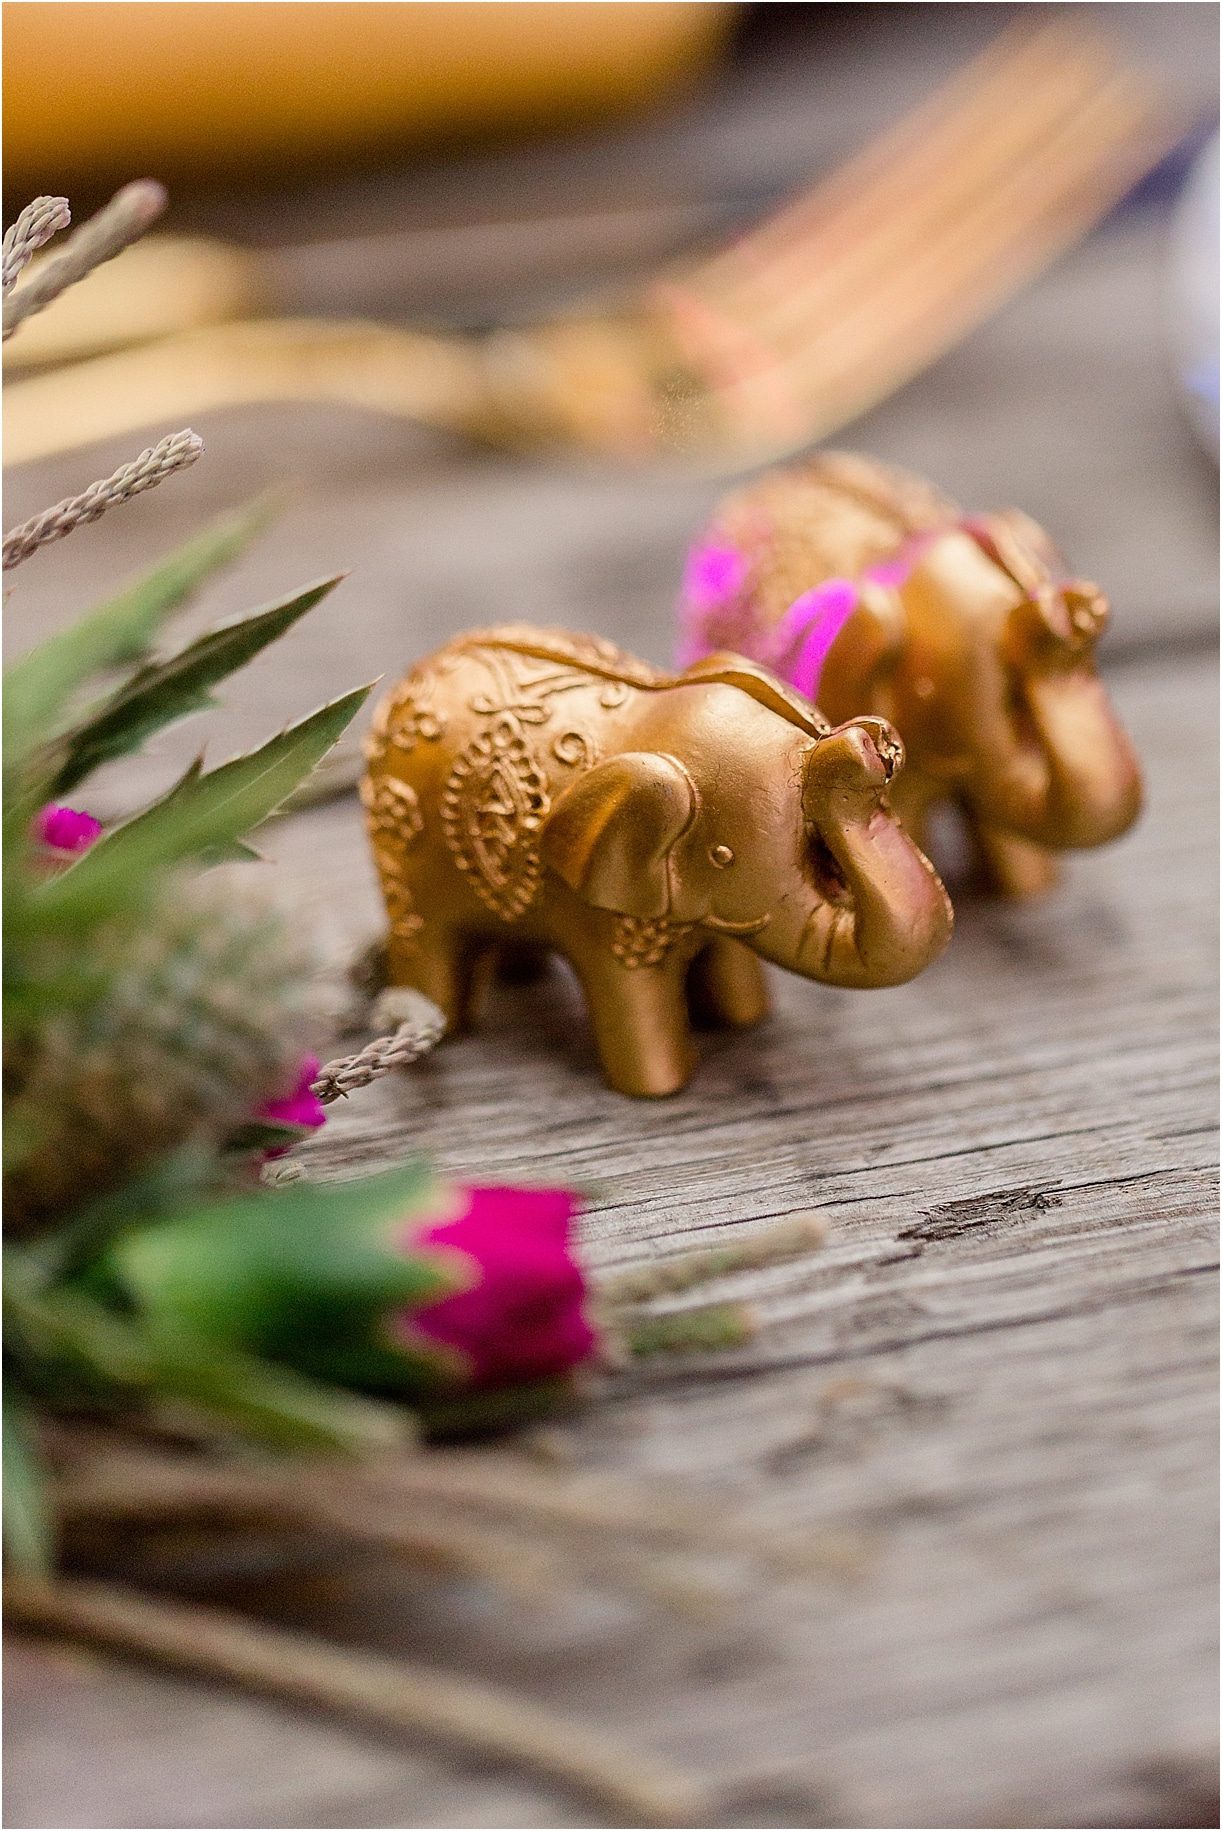 Middle Eastern Wedding | Hill City Bride Virginia Wedding Blog Travel Destination - gold elephant